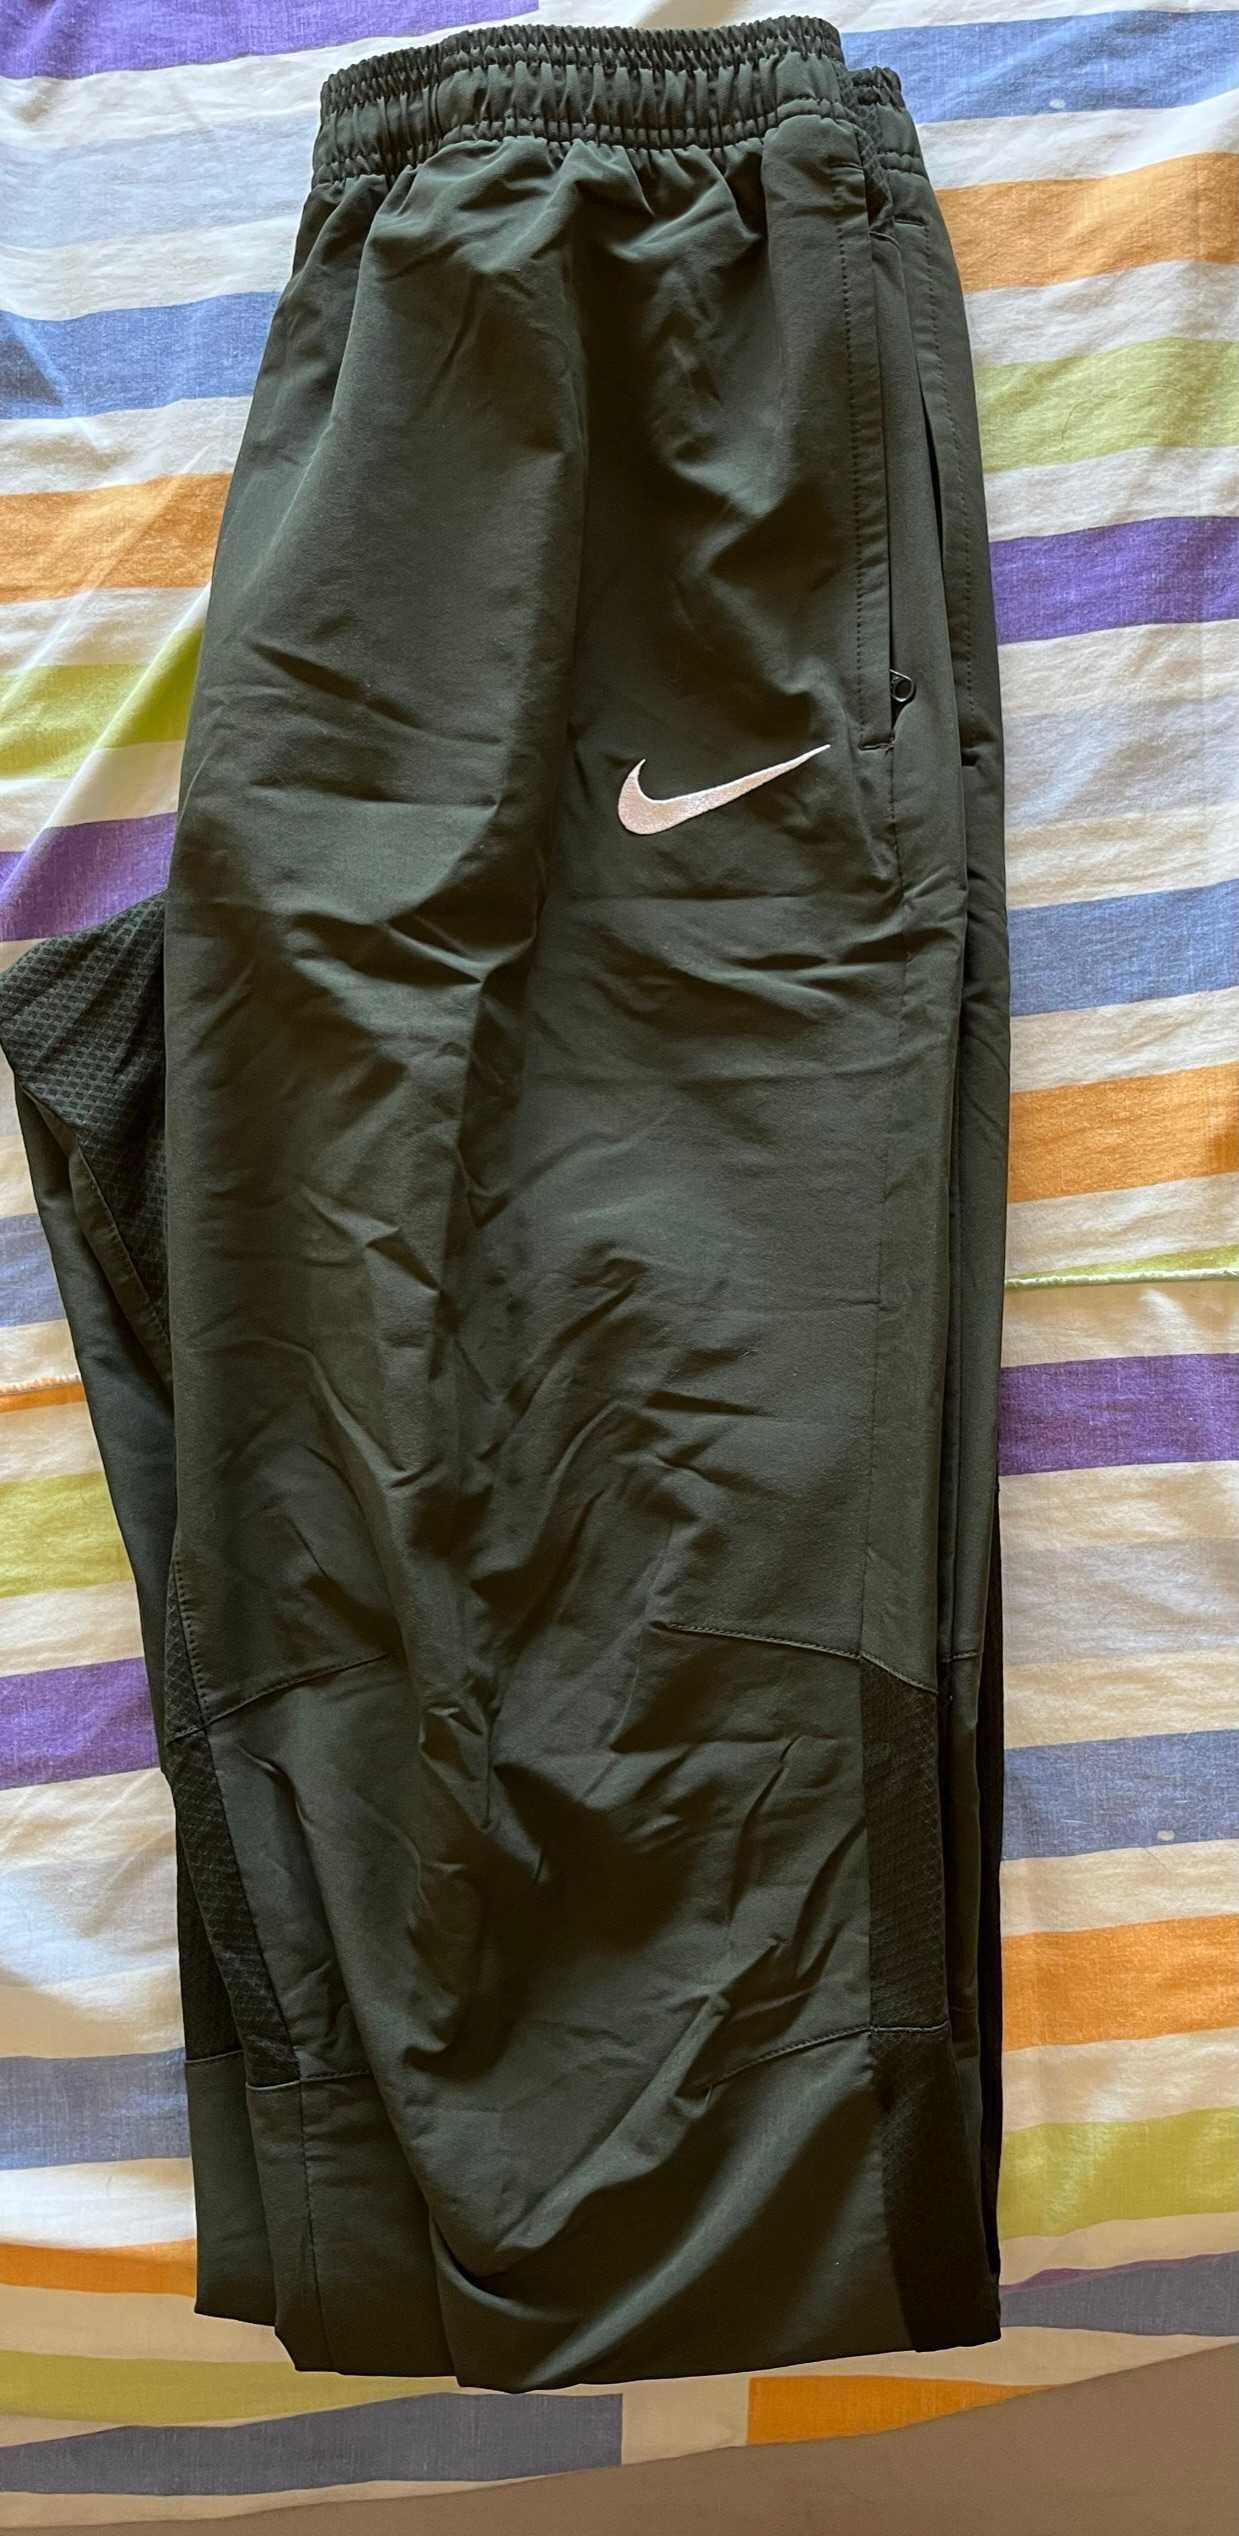 Calças Nike Portugal (L)